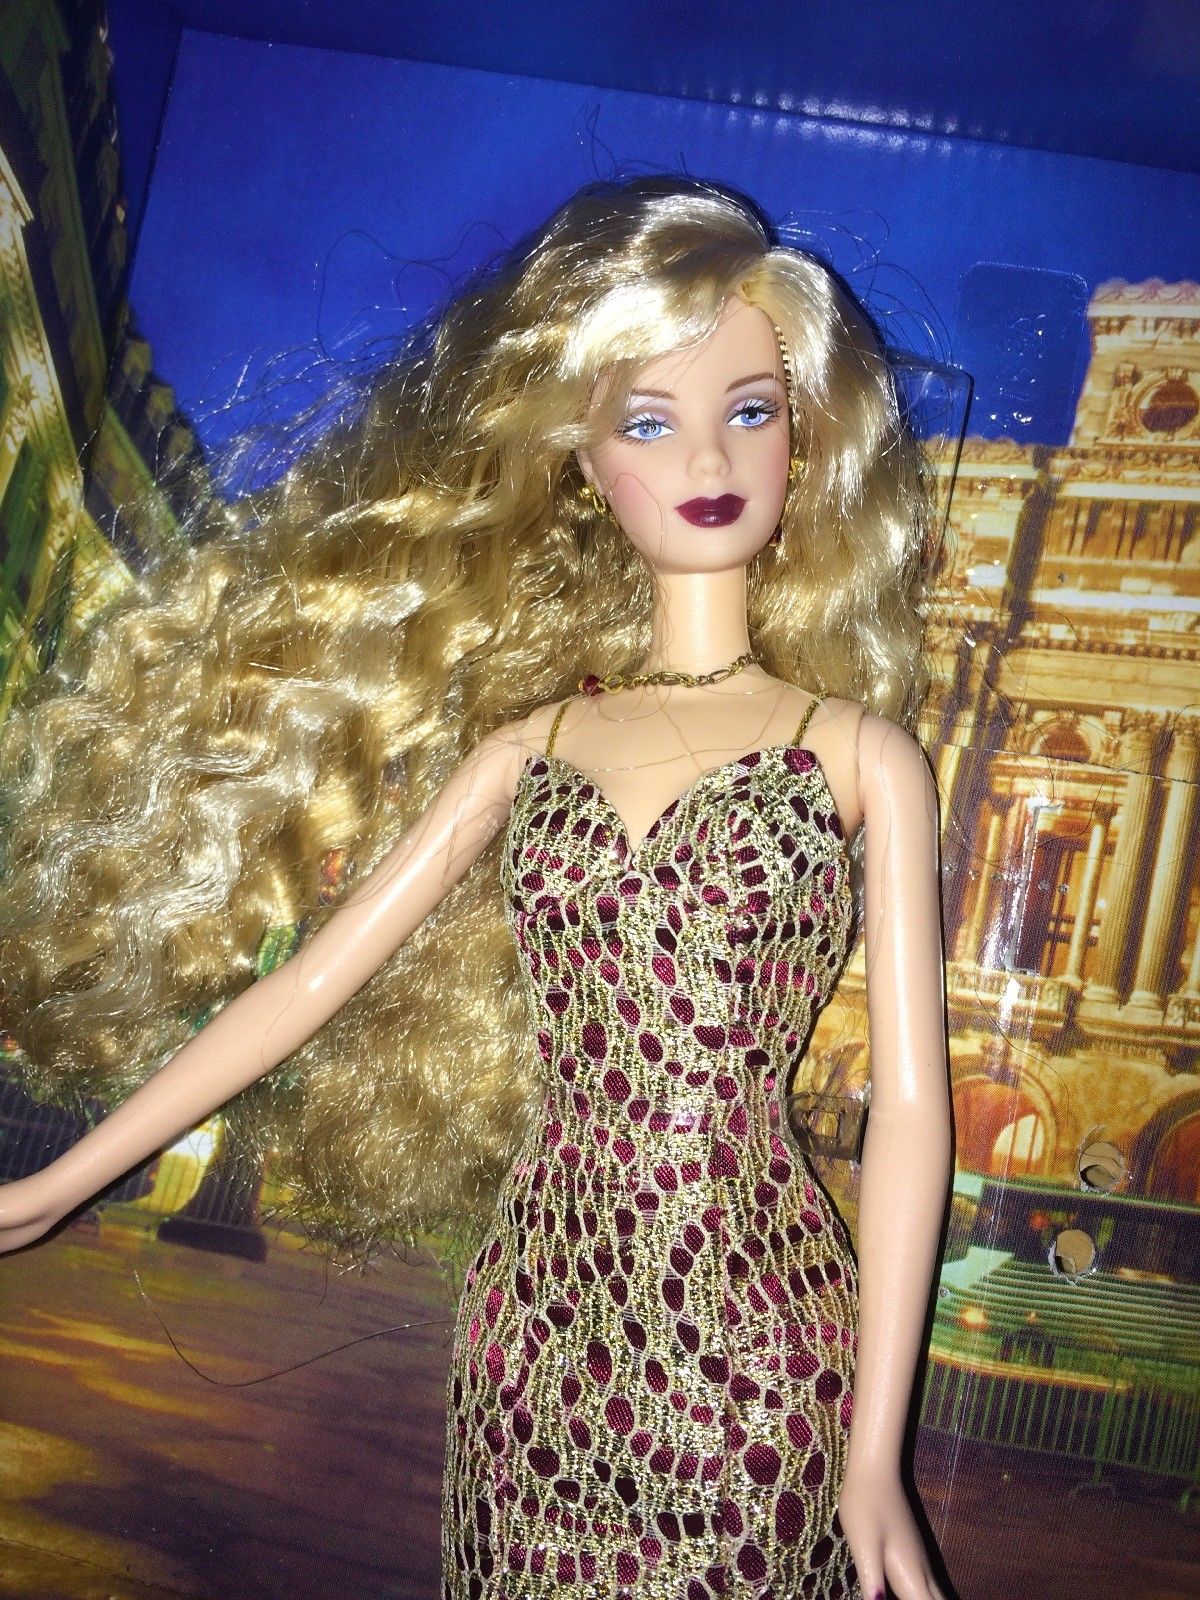 James Bond 007 Ken and Barbie Gift Set in 007 museum